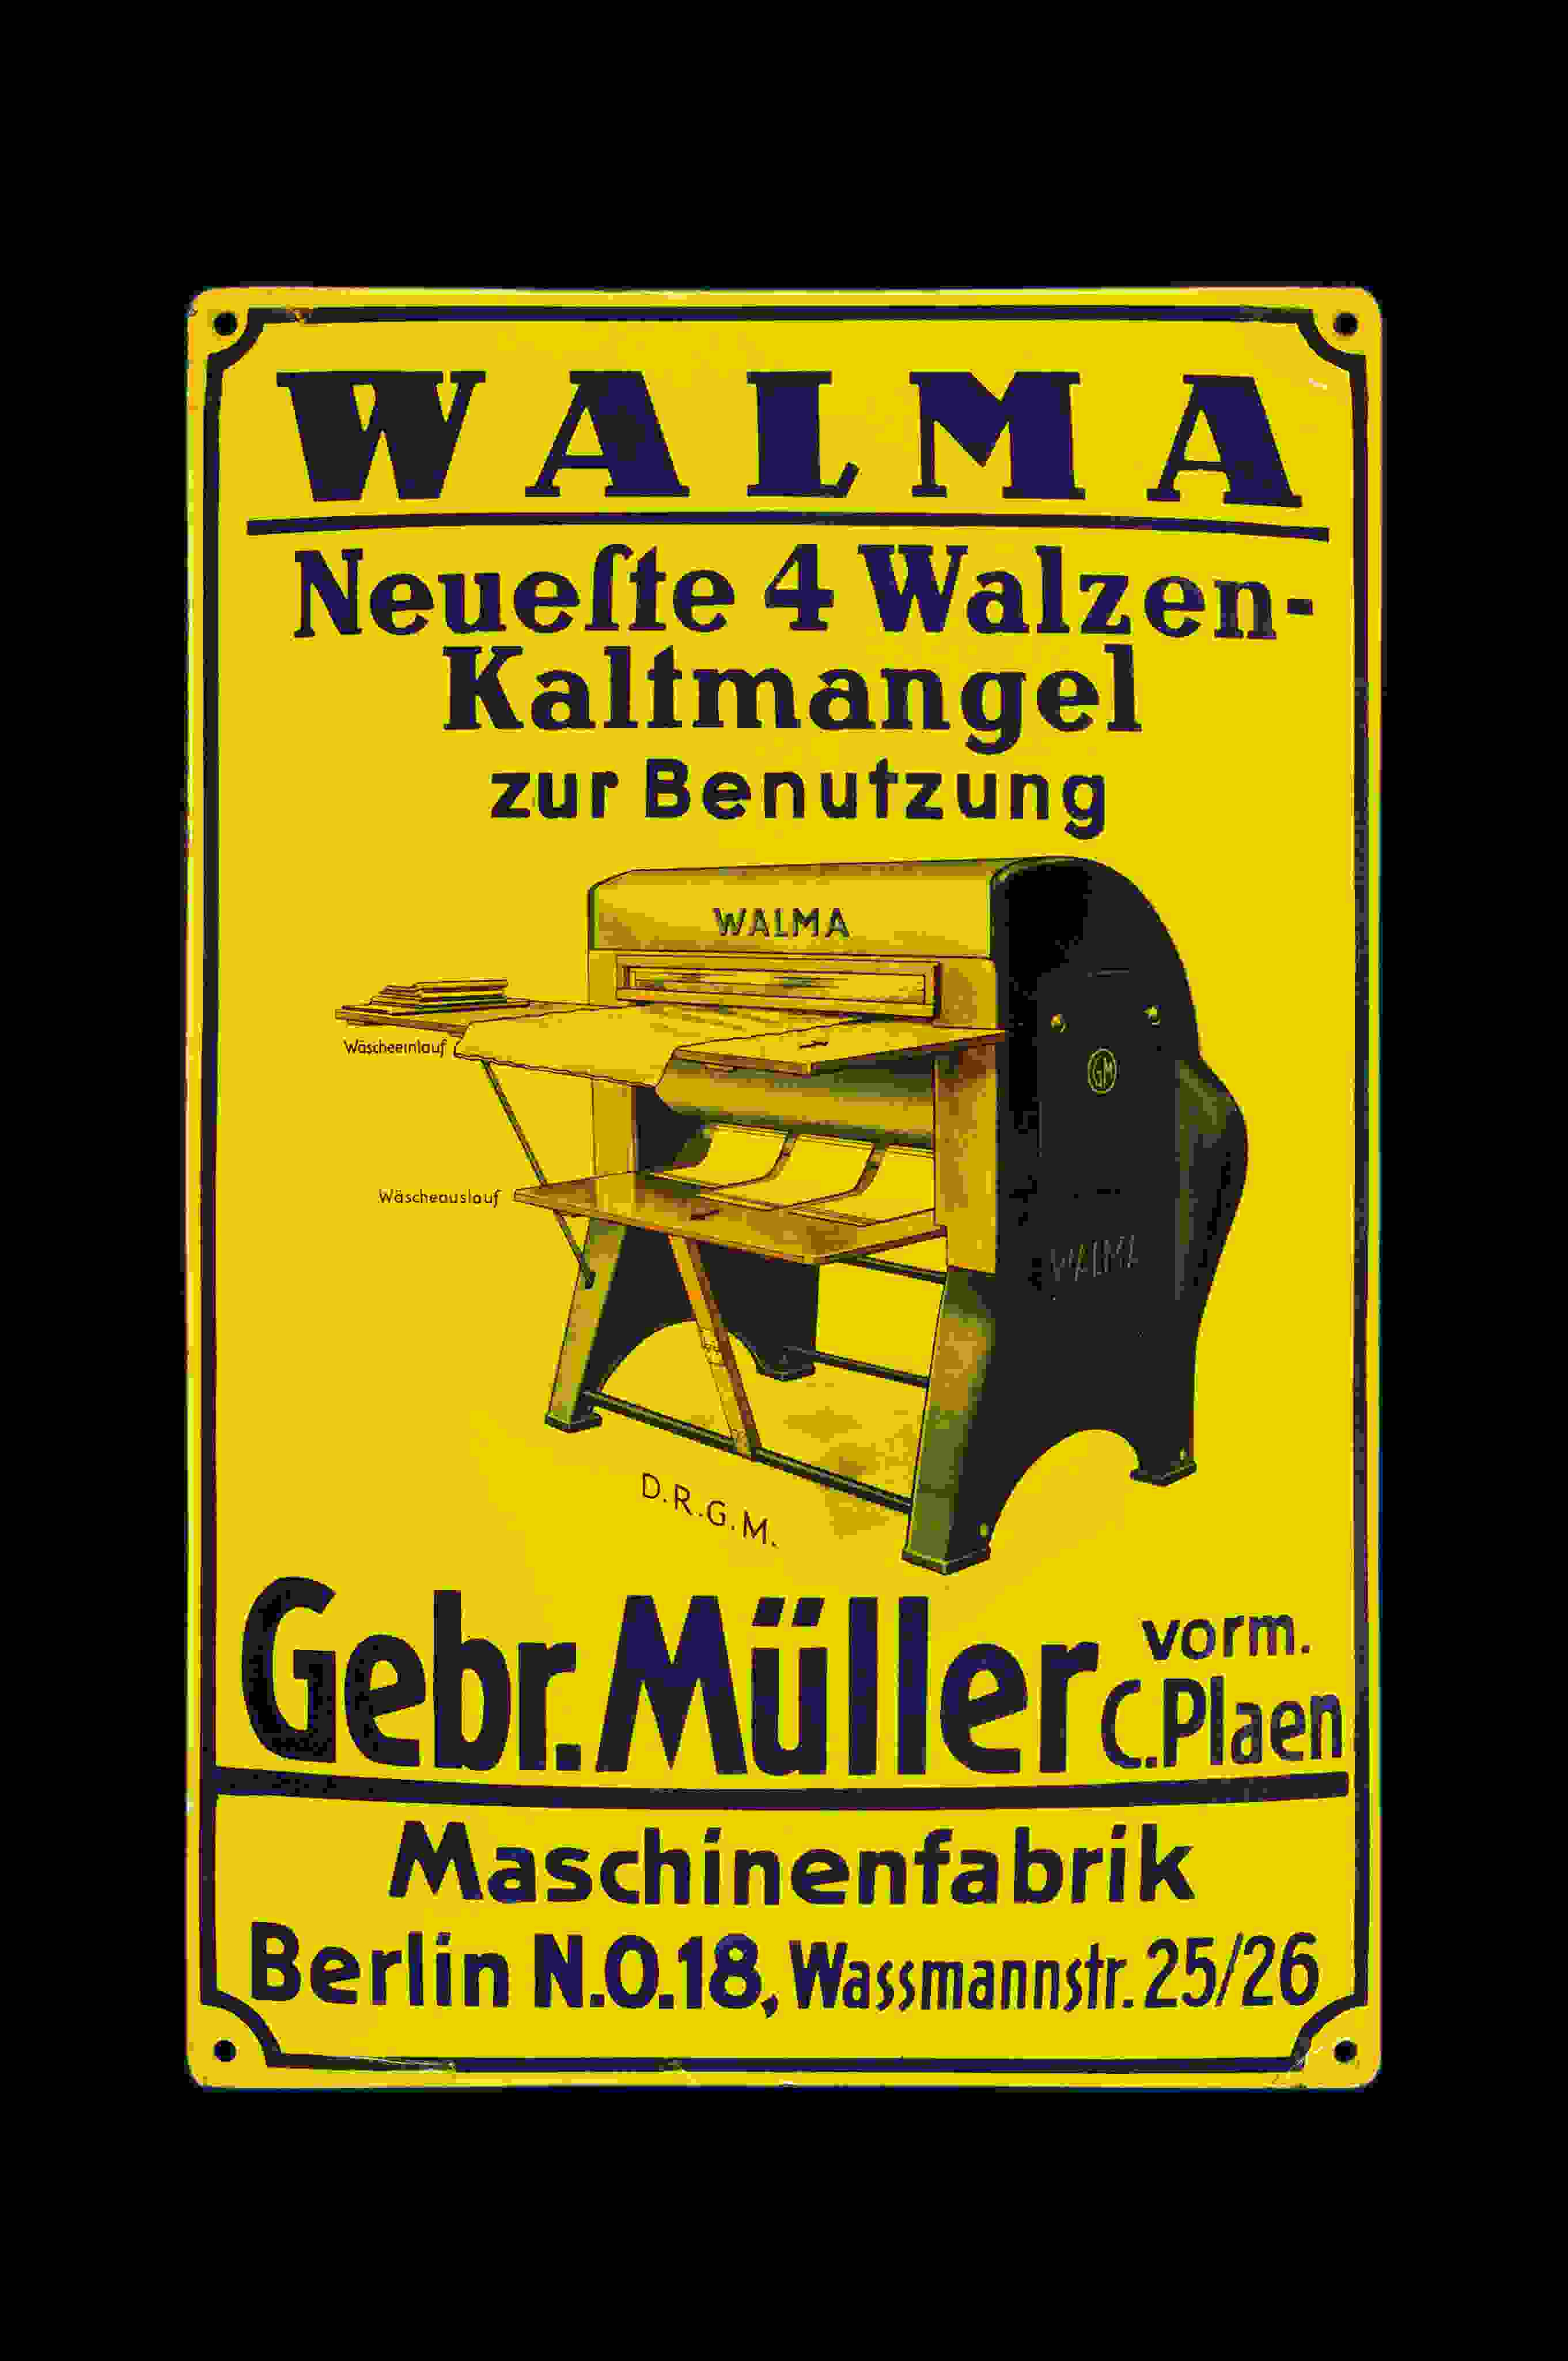 Walma Walzen-Kaltmangel Gebr. Müller 